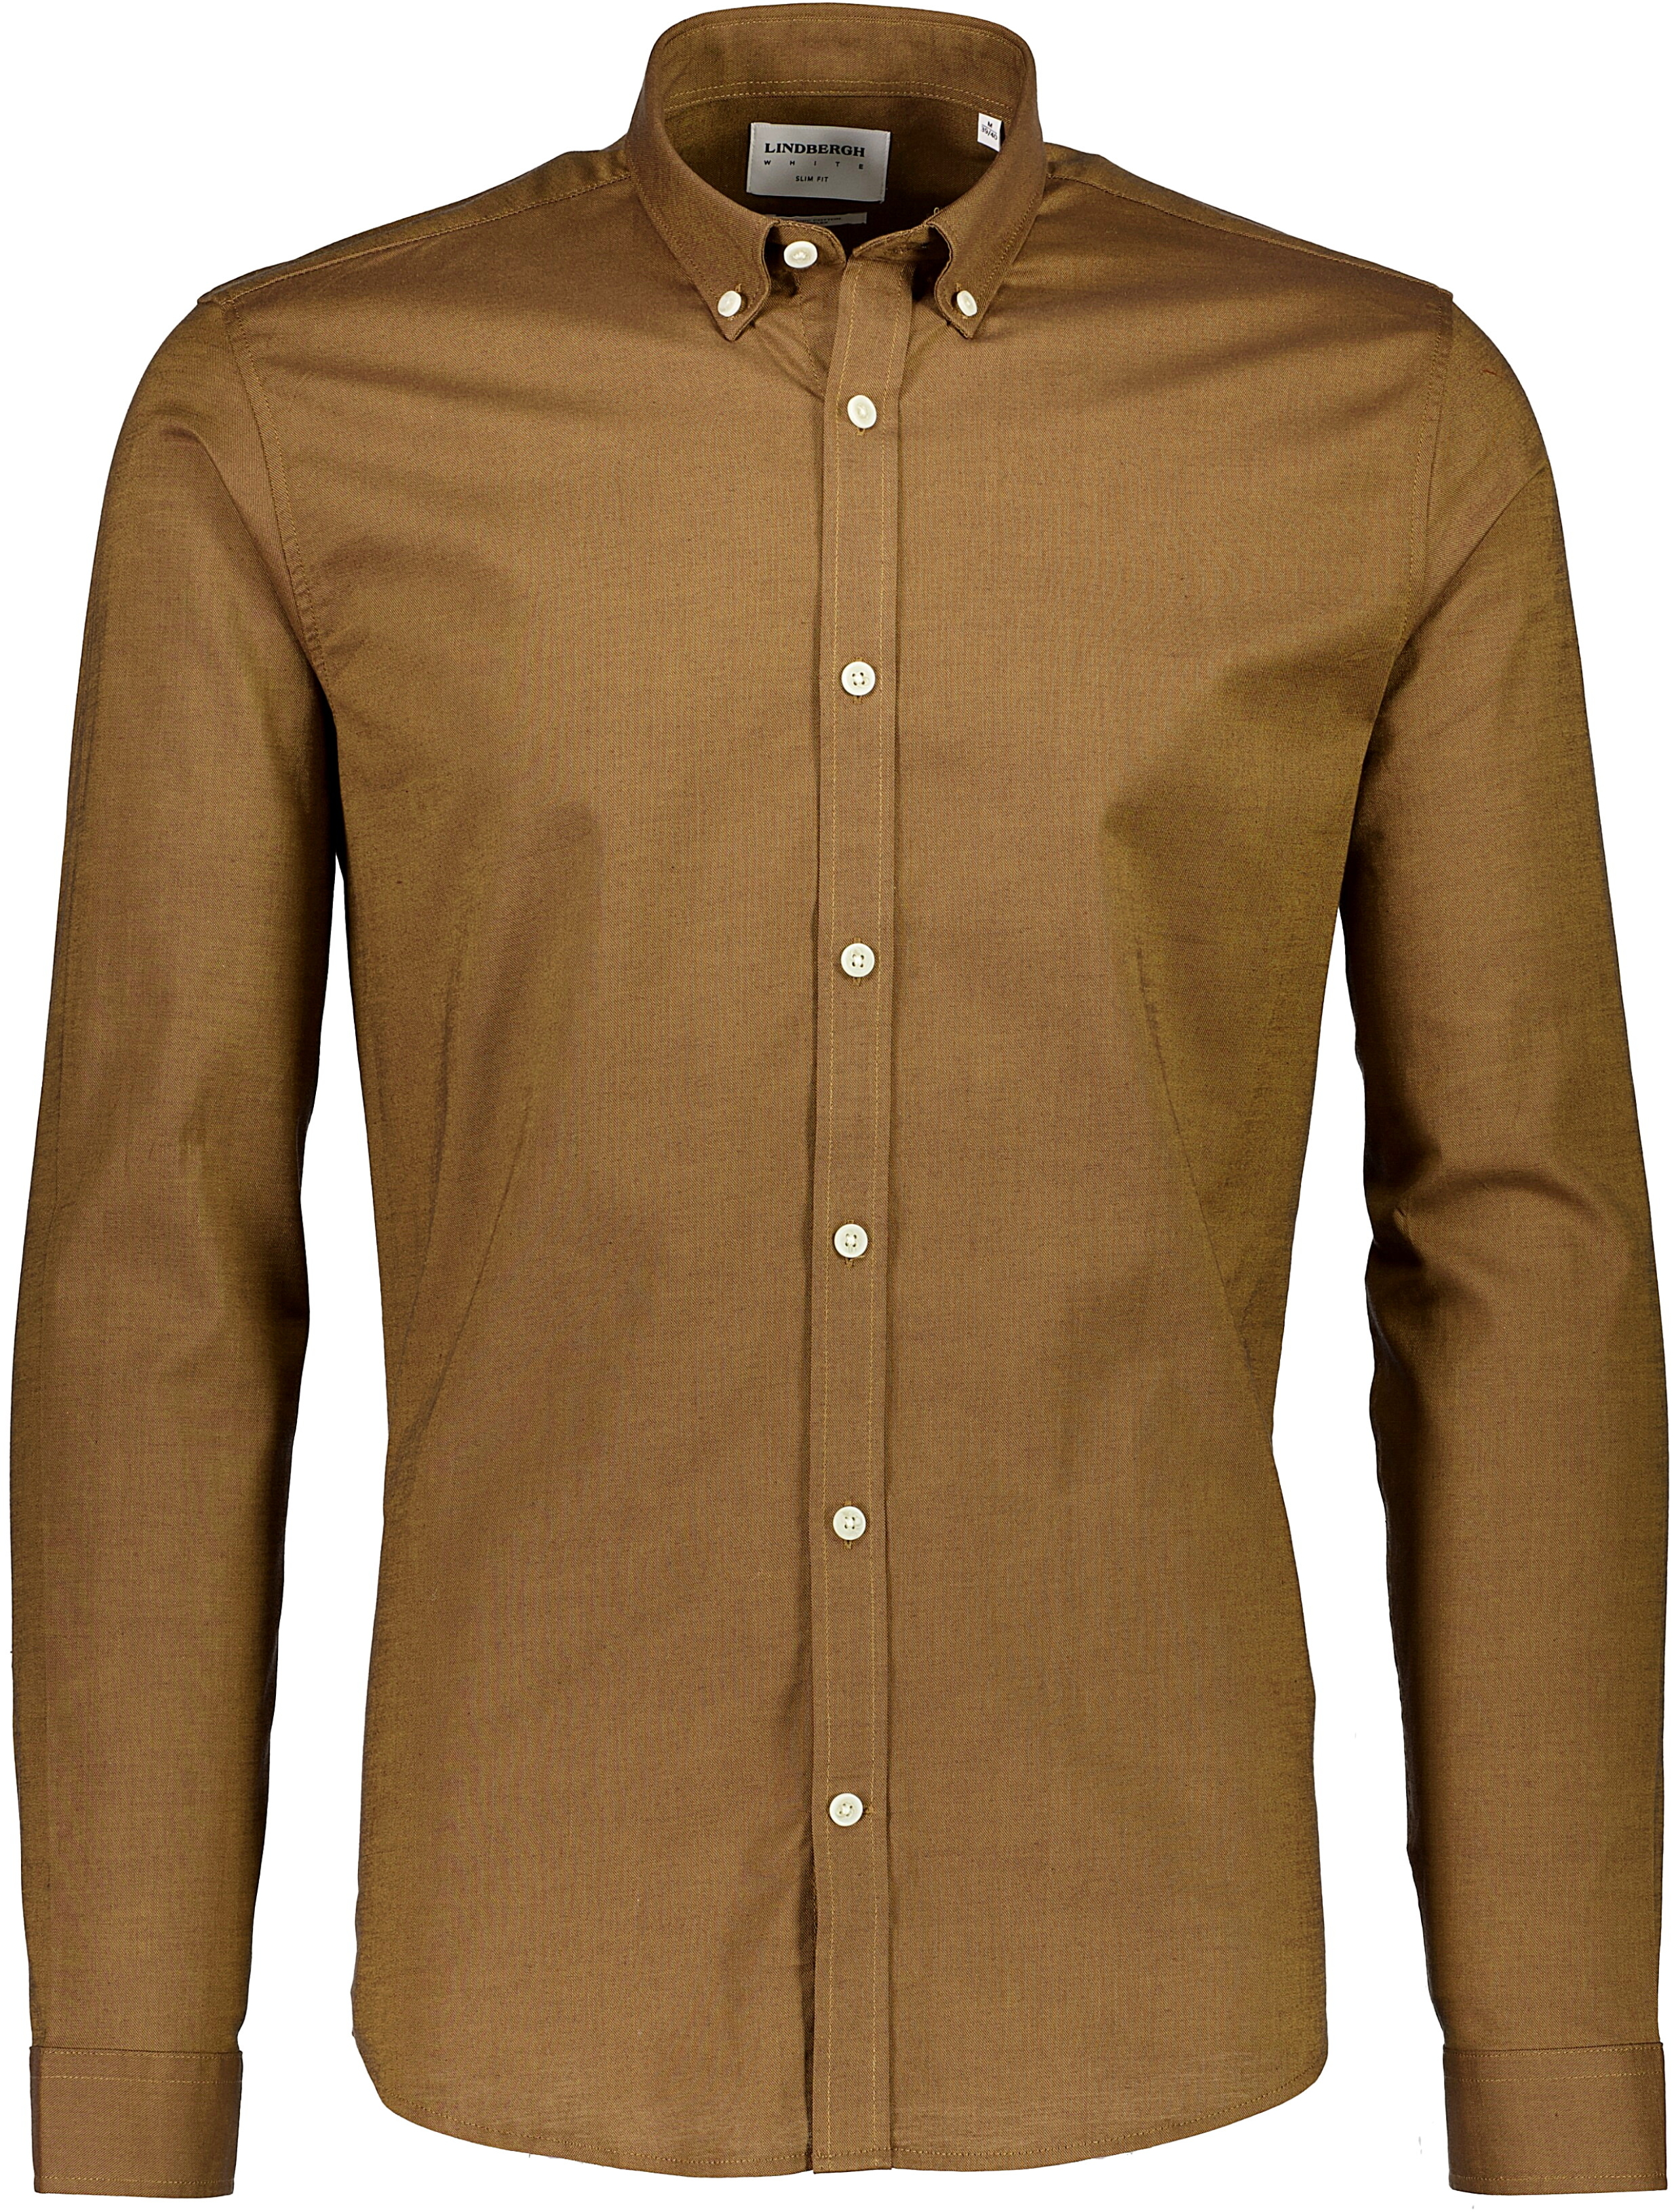 Lindbergh Oxford skjorte brun / brown